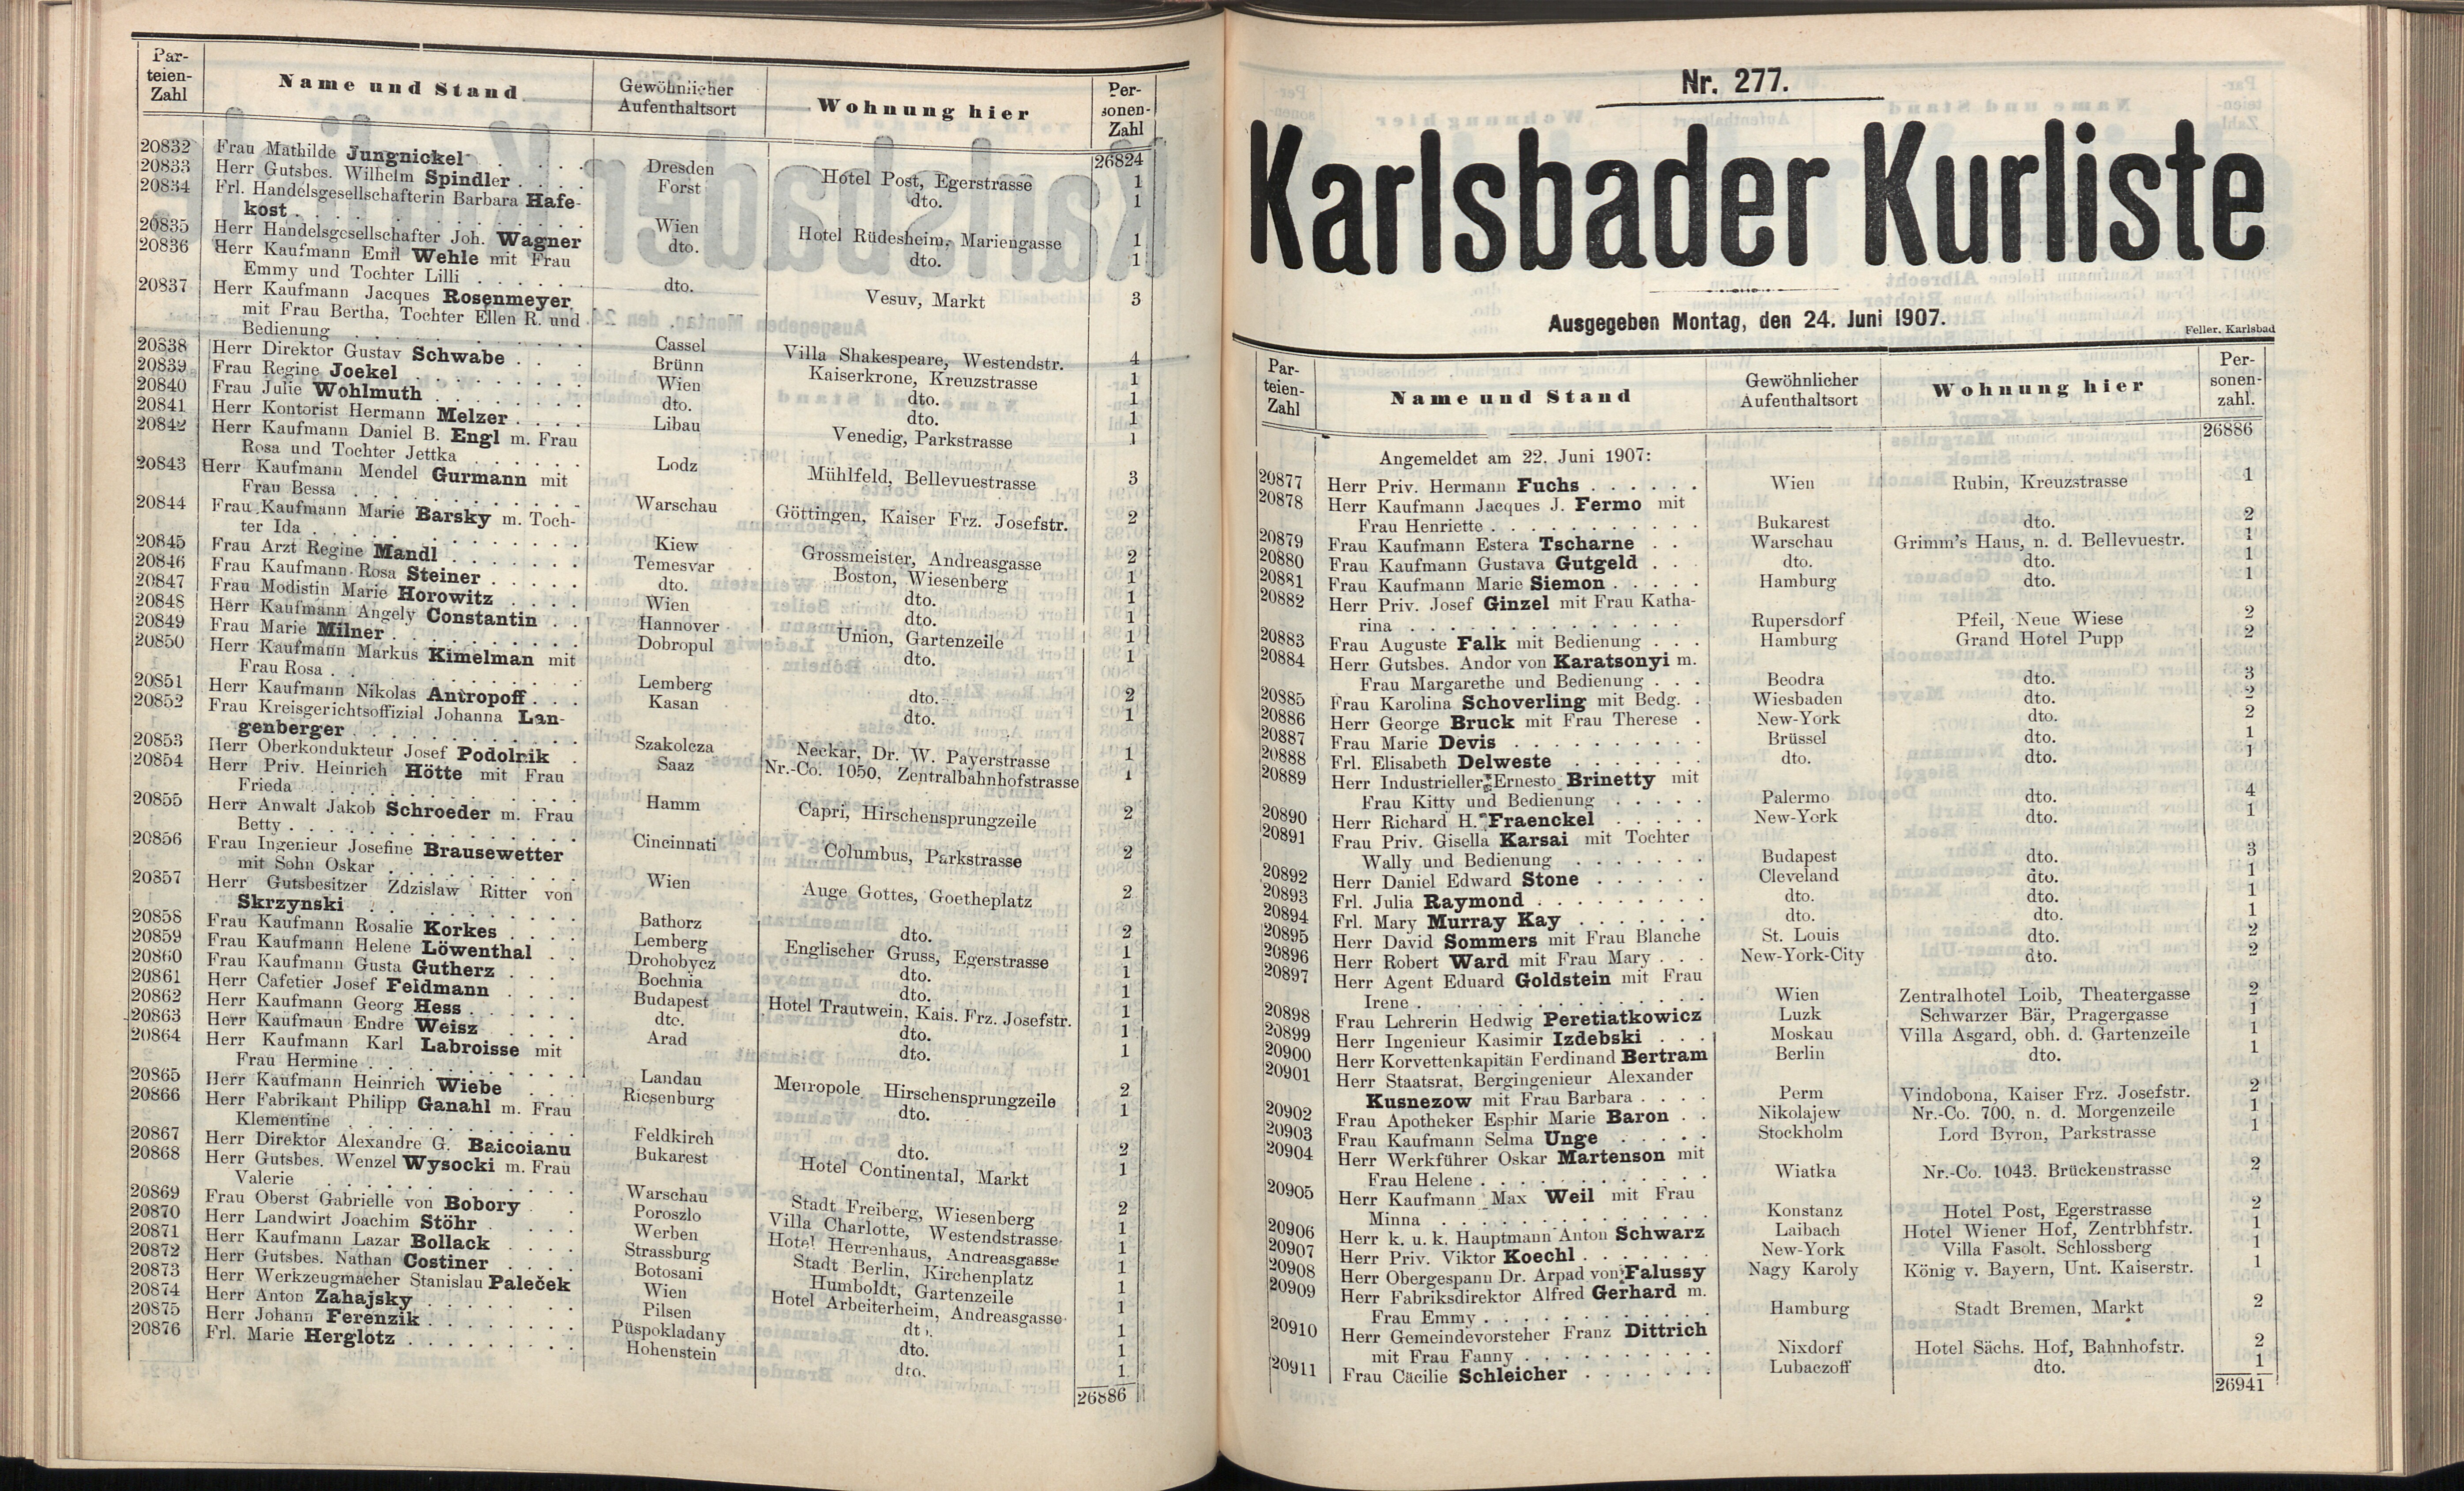 390. soap-kv_knihovna_karlsbader-kurliste-1907_3910